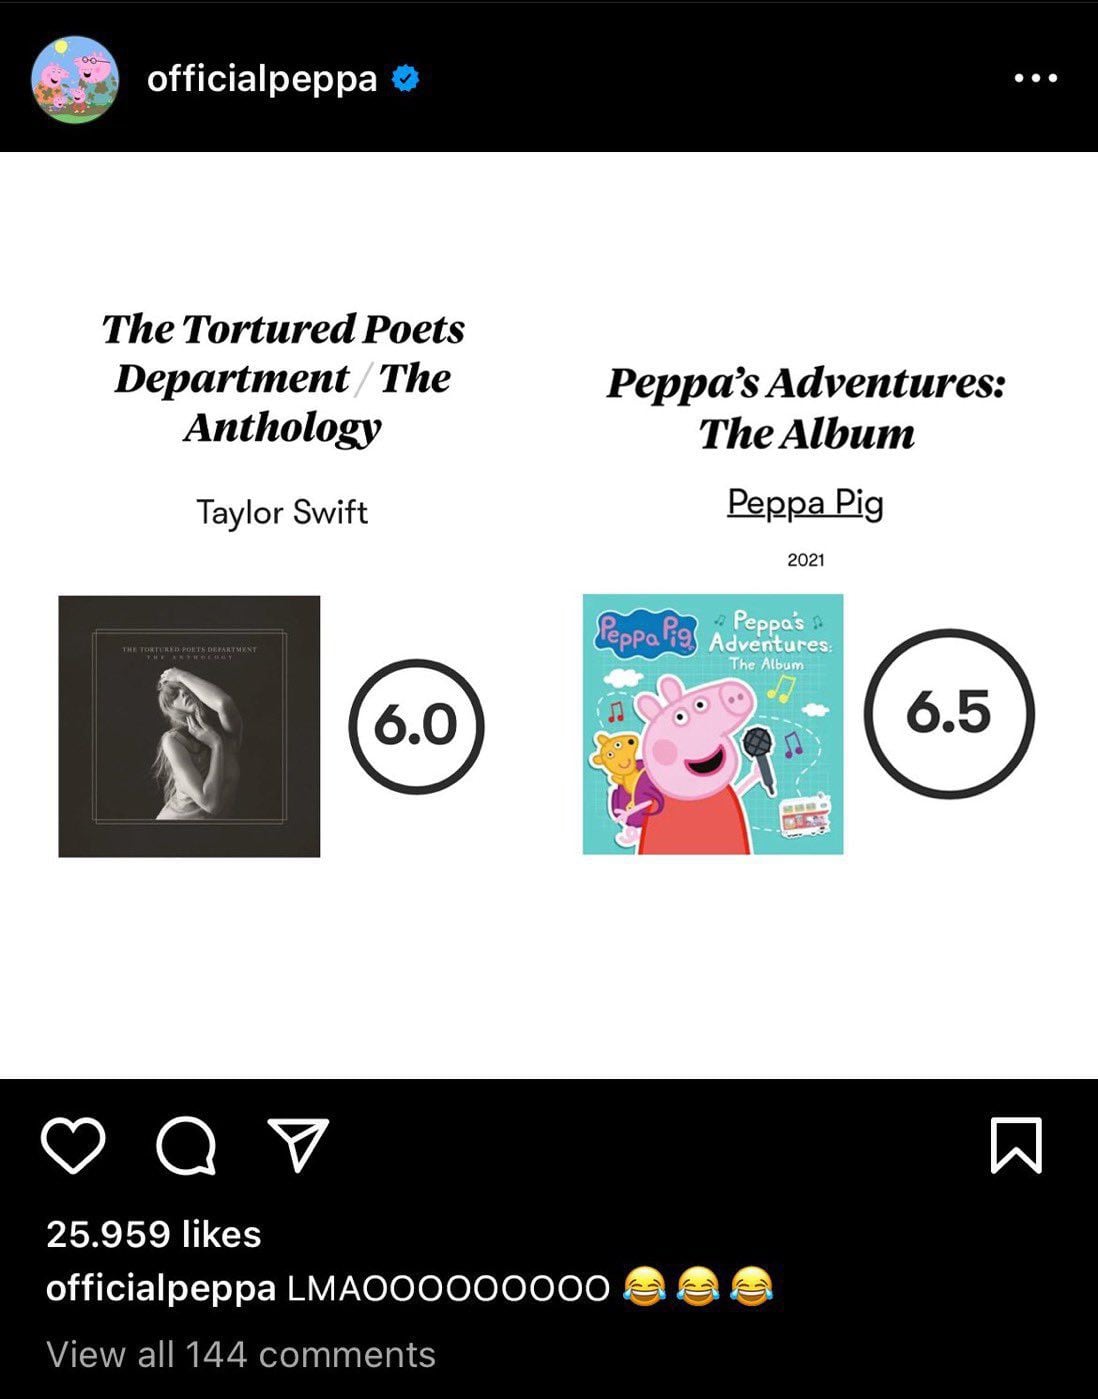 Peppa Pig se burla de Taylor Swift y suu disco The Tortured Poets Department